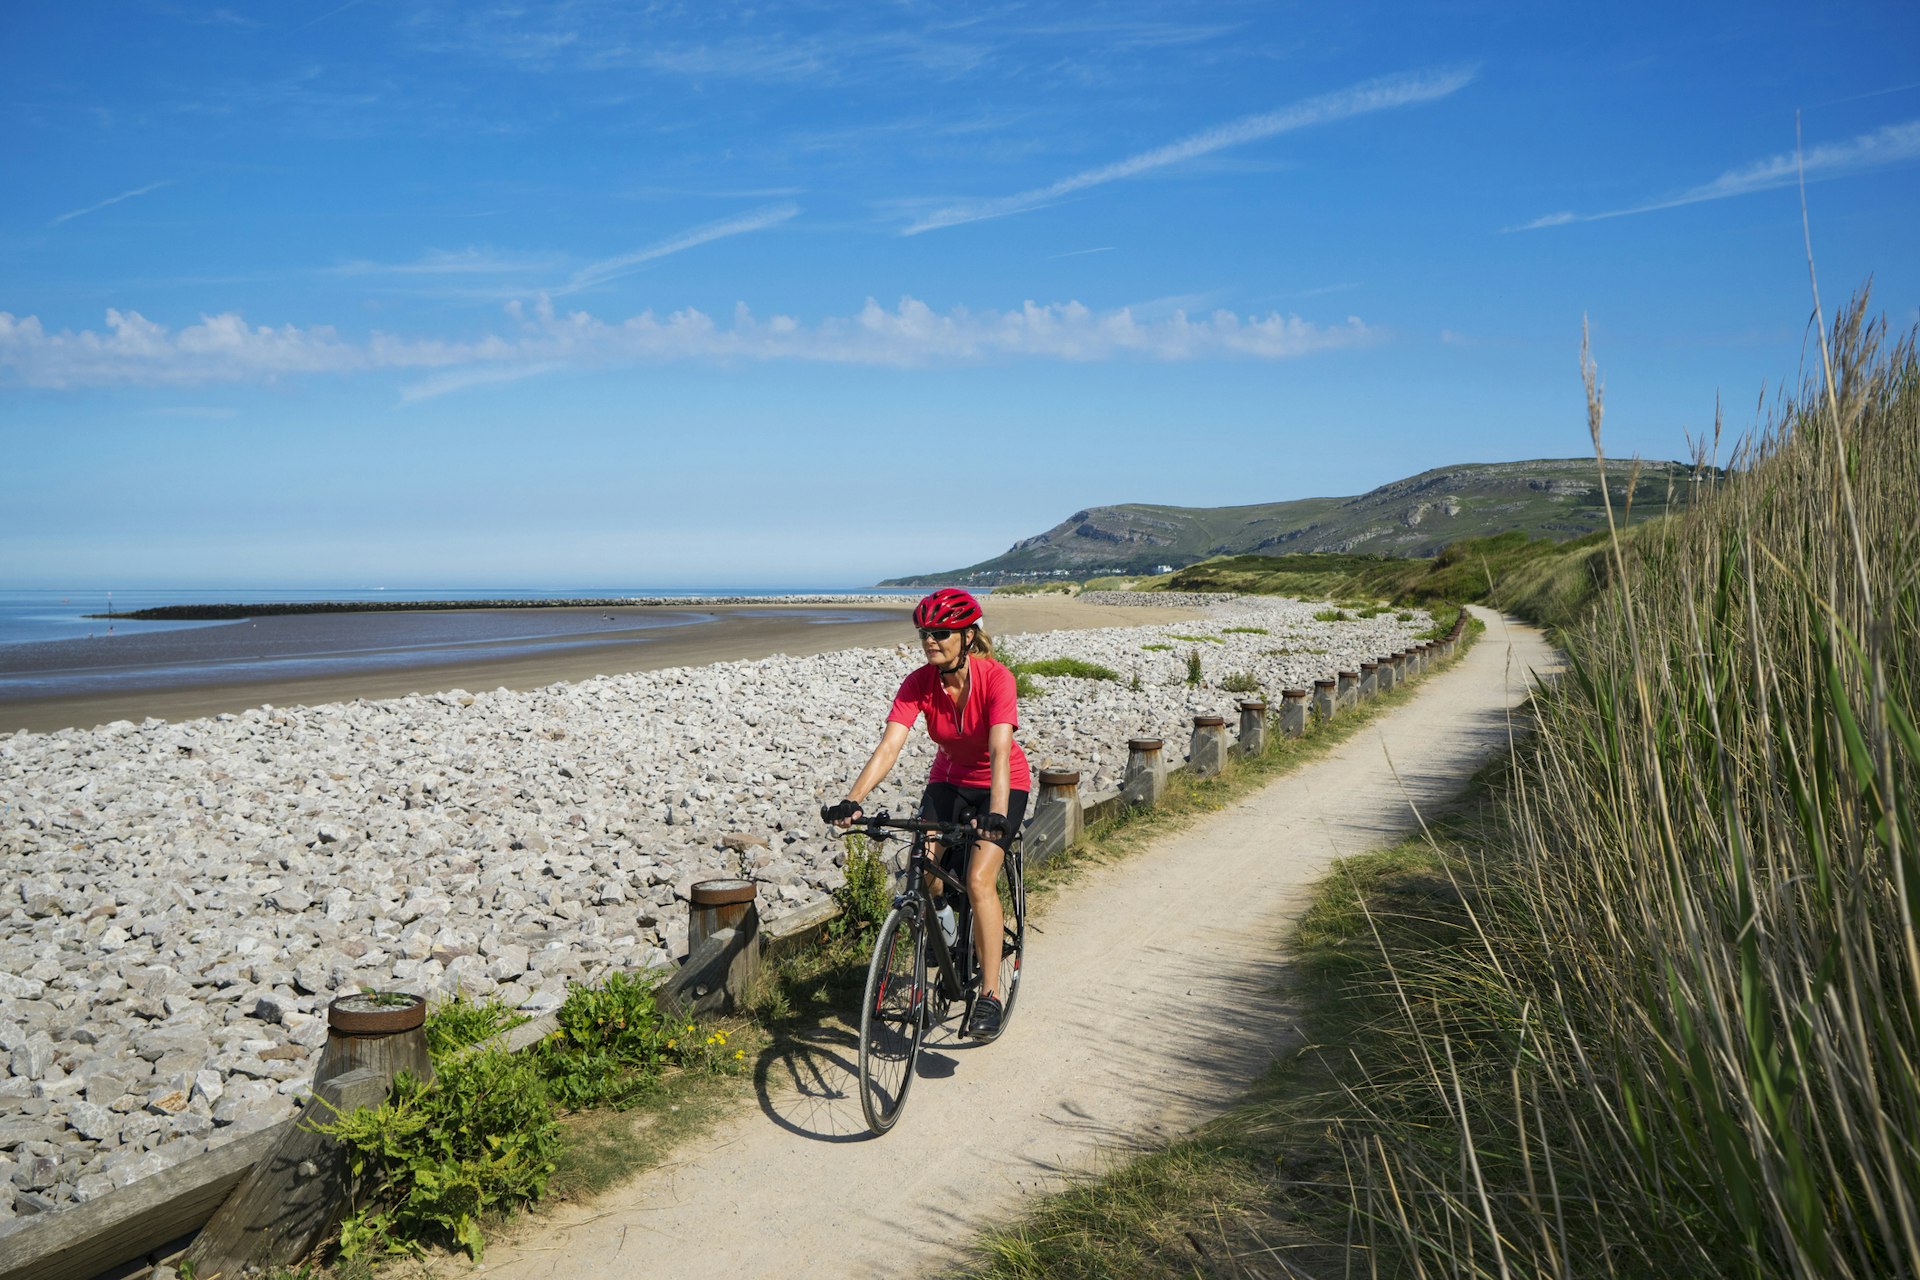 A white female cyclist rides a bike along a paved flat coastal path with a sandy beach